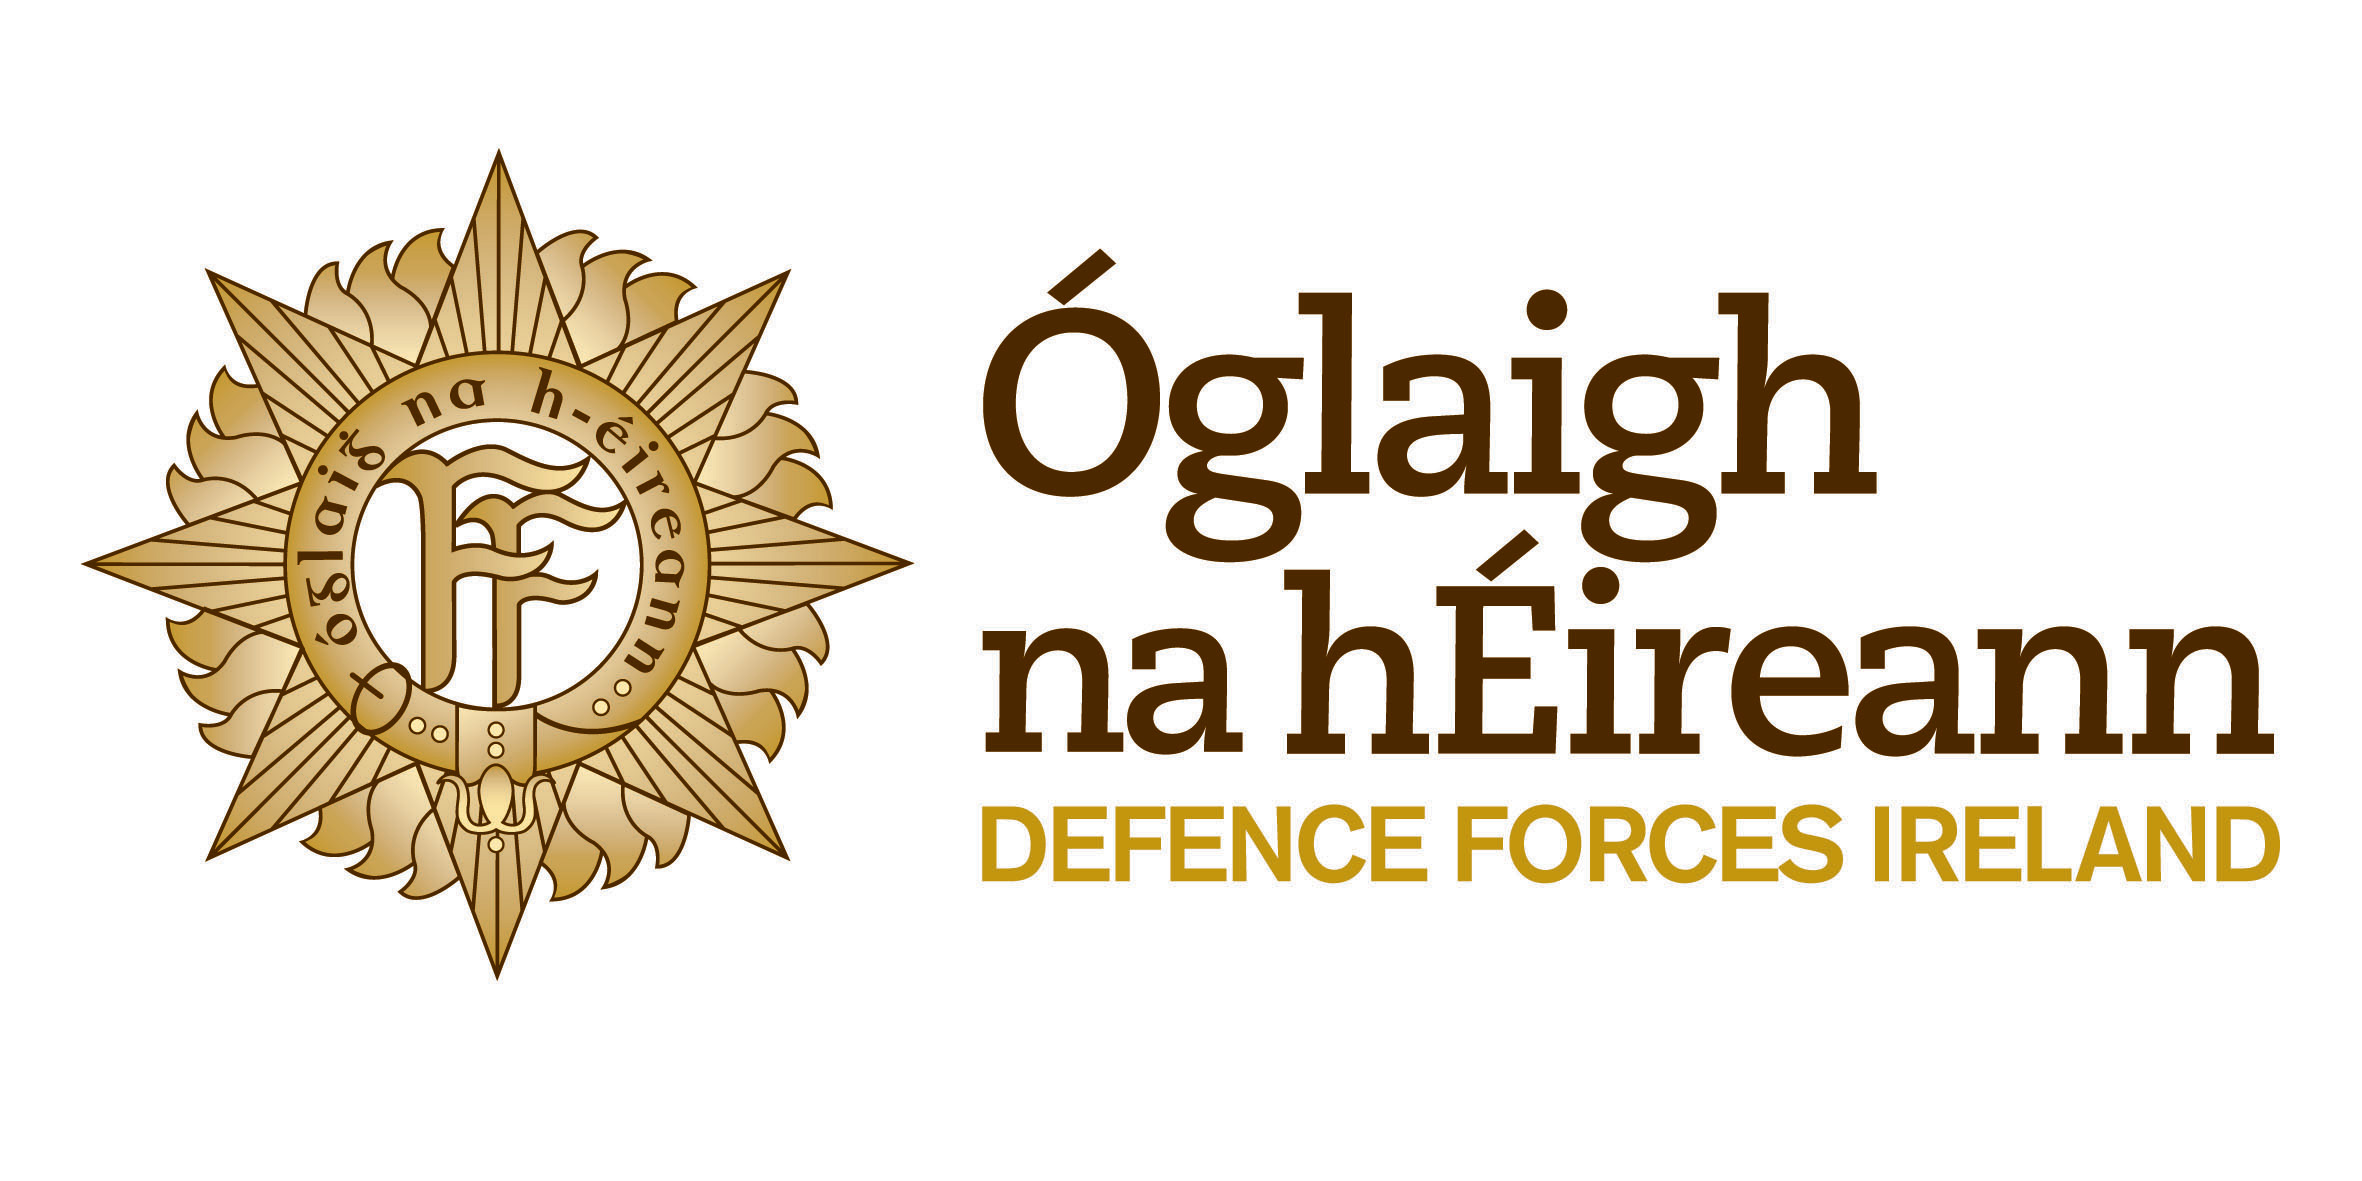 Irish Defense Forces